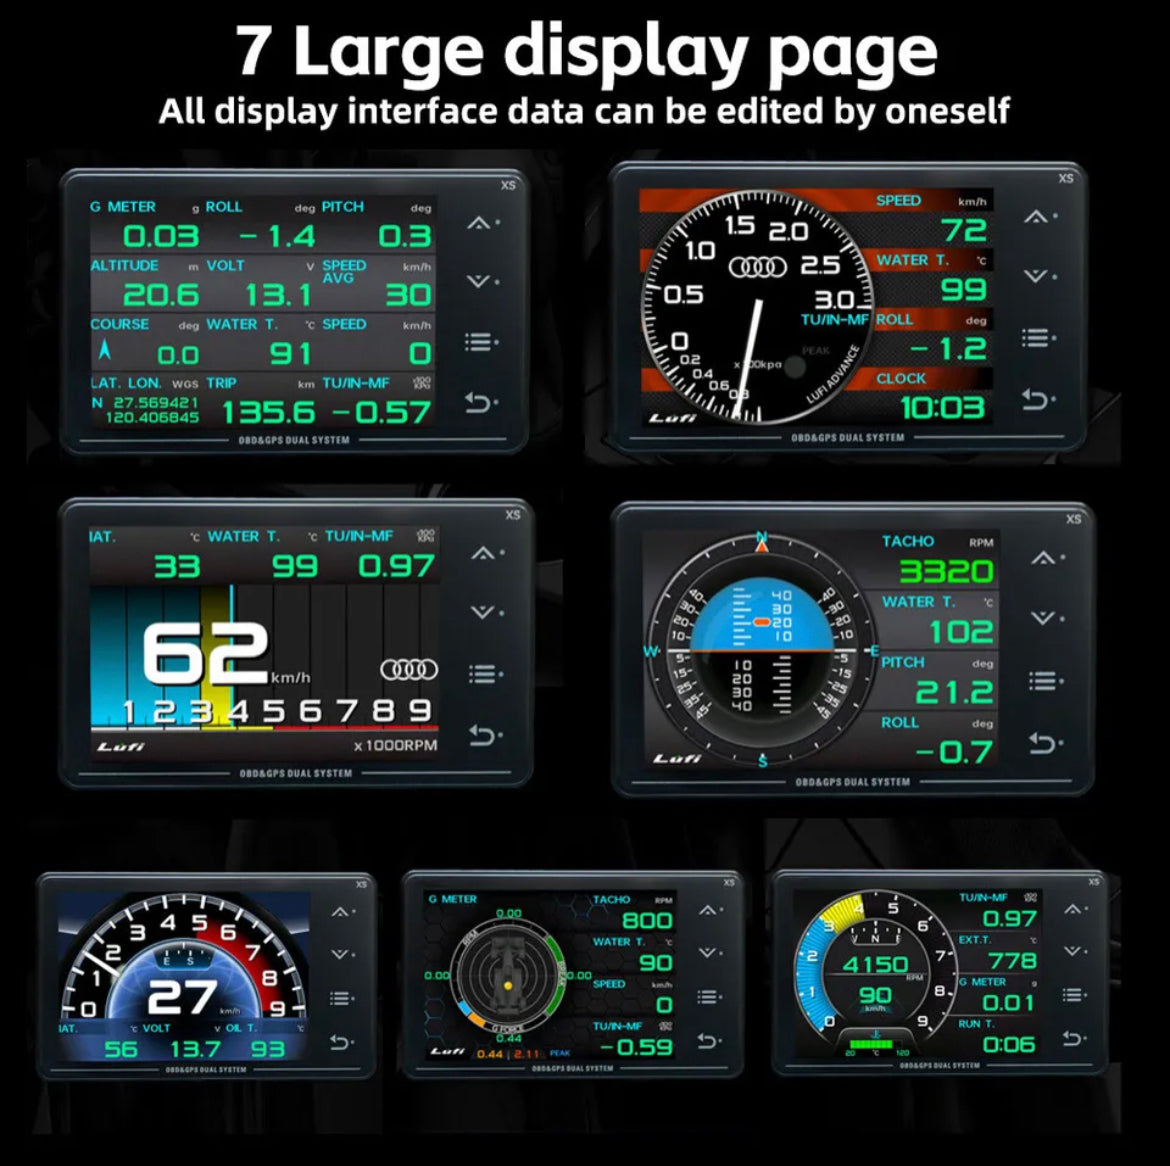 HPS Lufi Xs Obd2 Gauge Display, GPS Speedometer,car inclinometer